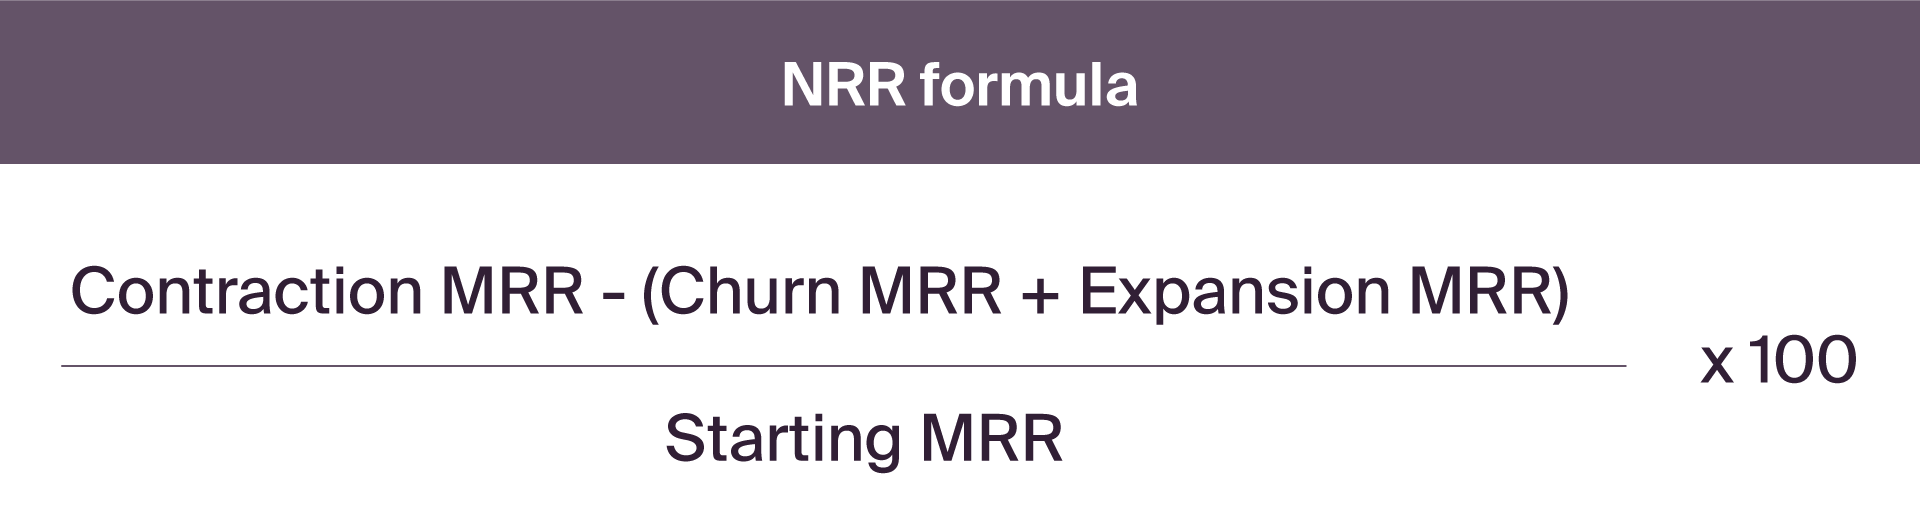 NRR Formula